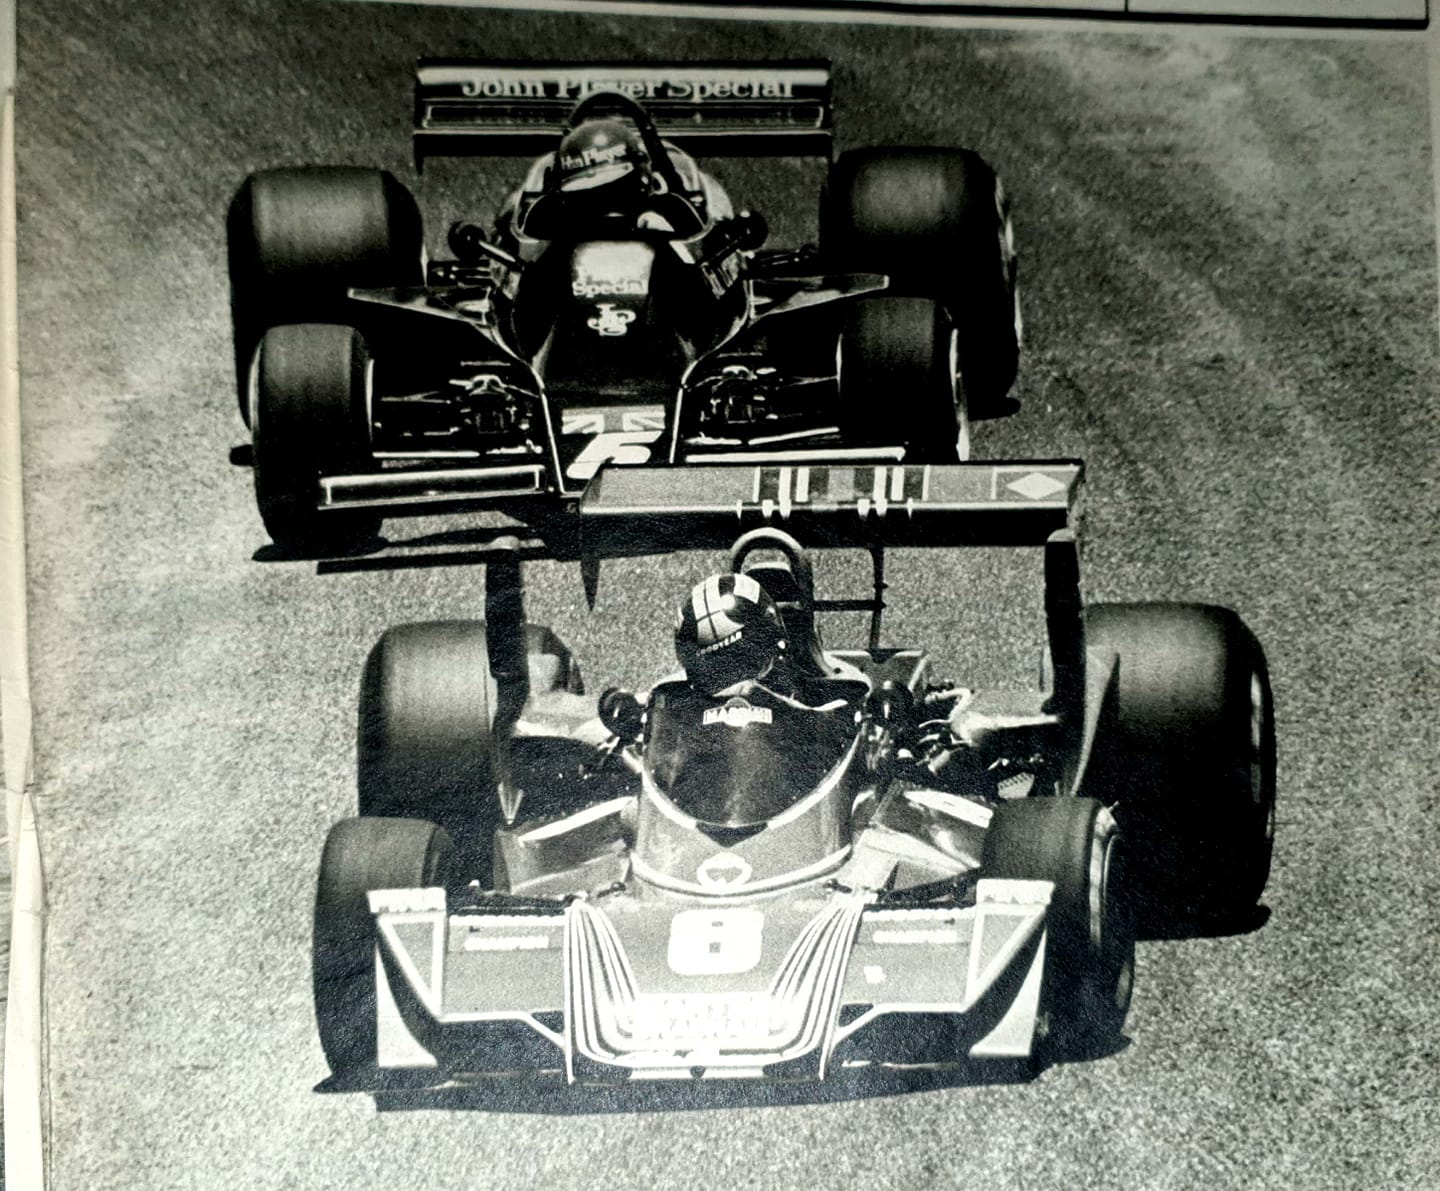 Brazilian GP at Interlagos on 25 January 1976.